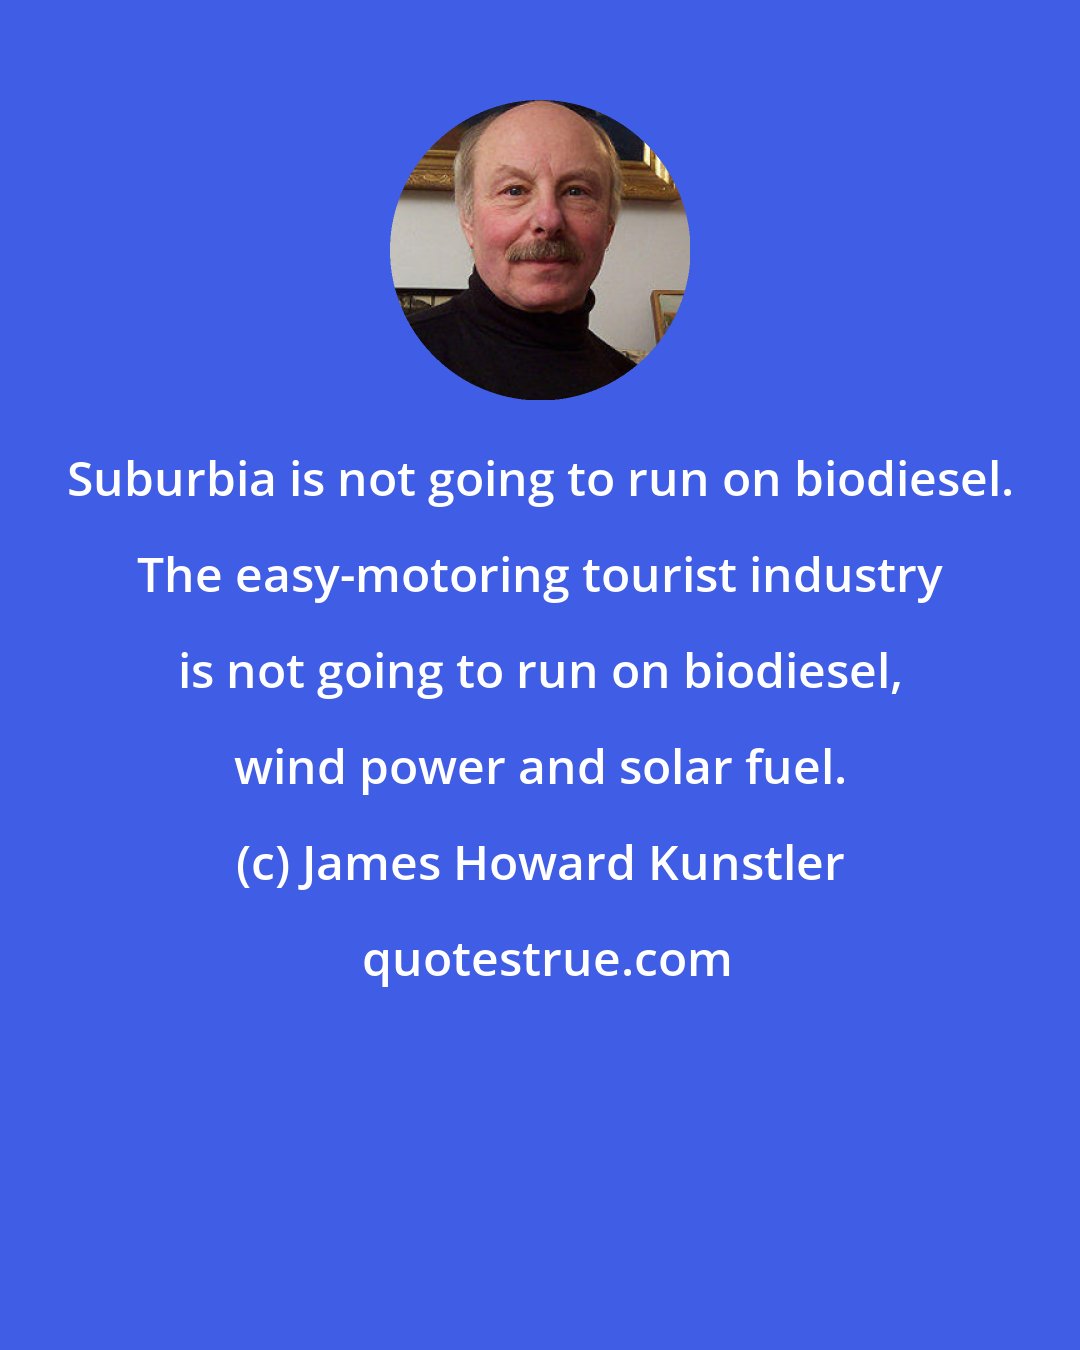 James Howard Kunstler: Suburbia is not going to run on biodiesel. The easy-motoring tourist industry is not going to run on biodiesel, wind power and solar fuel.